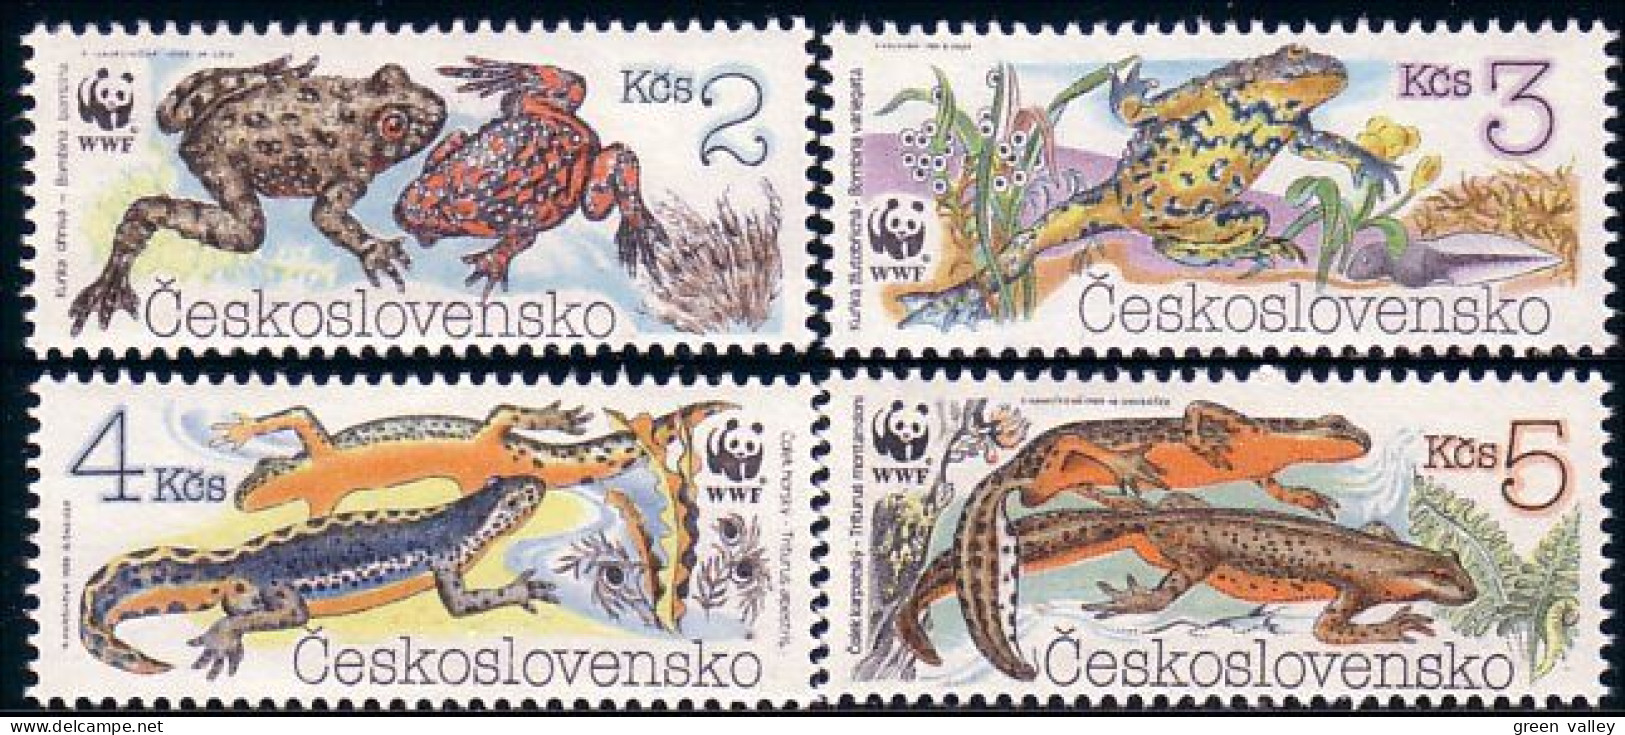 290 Czechoslovakia Frogs Grenouilles WWF MNH ** Neuf SC (CZE-101b) - Kikkers